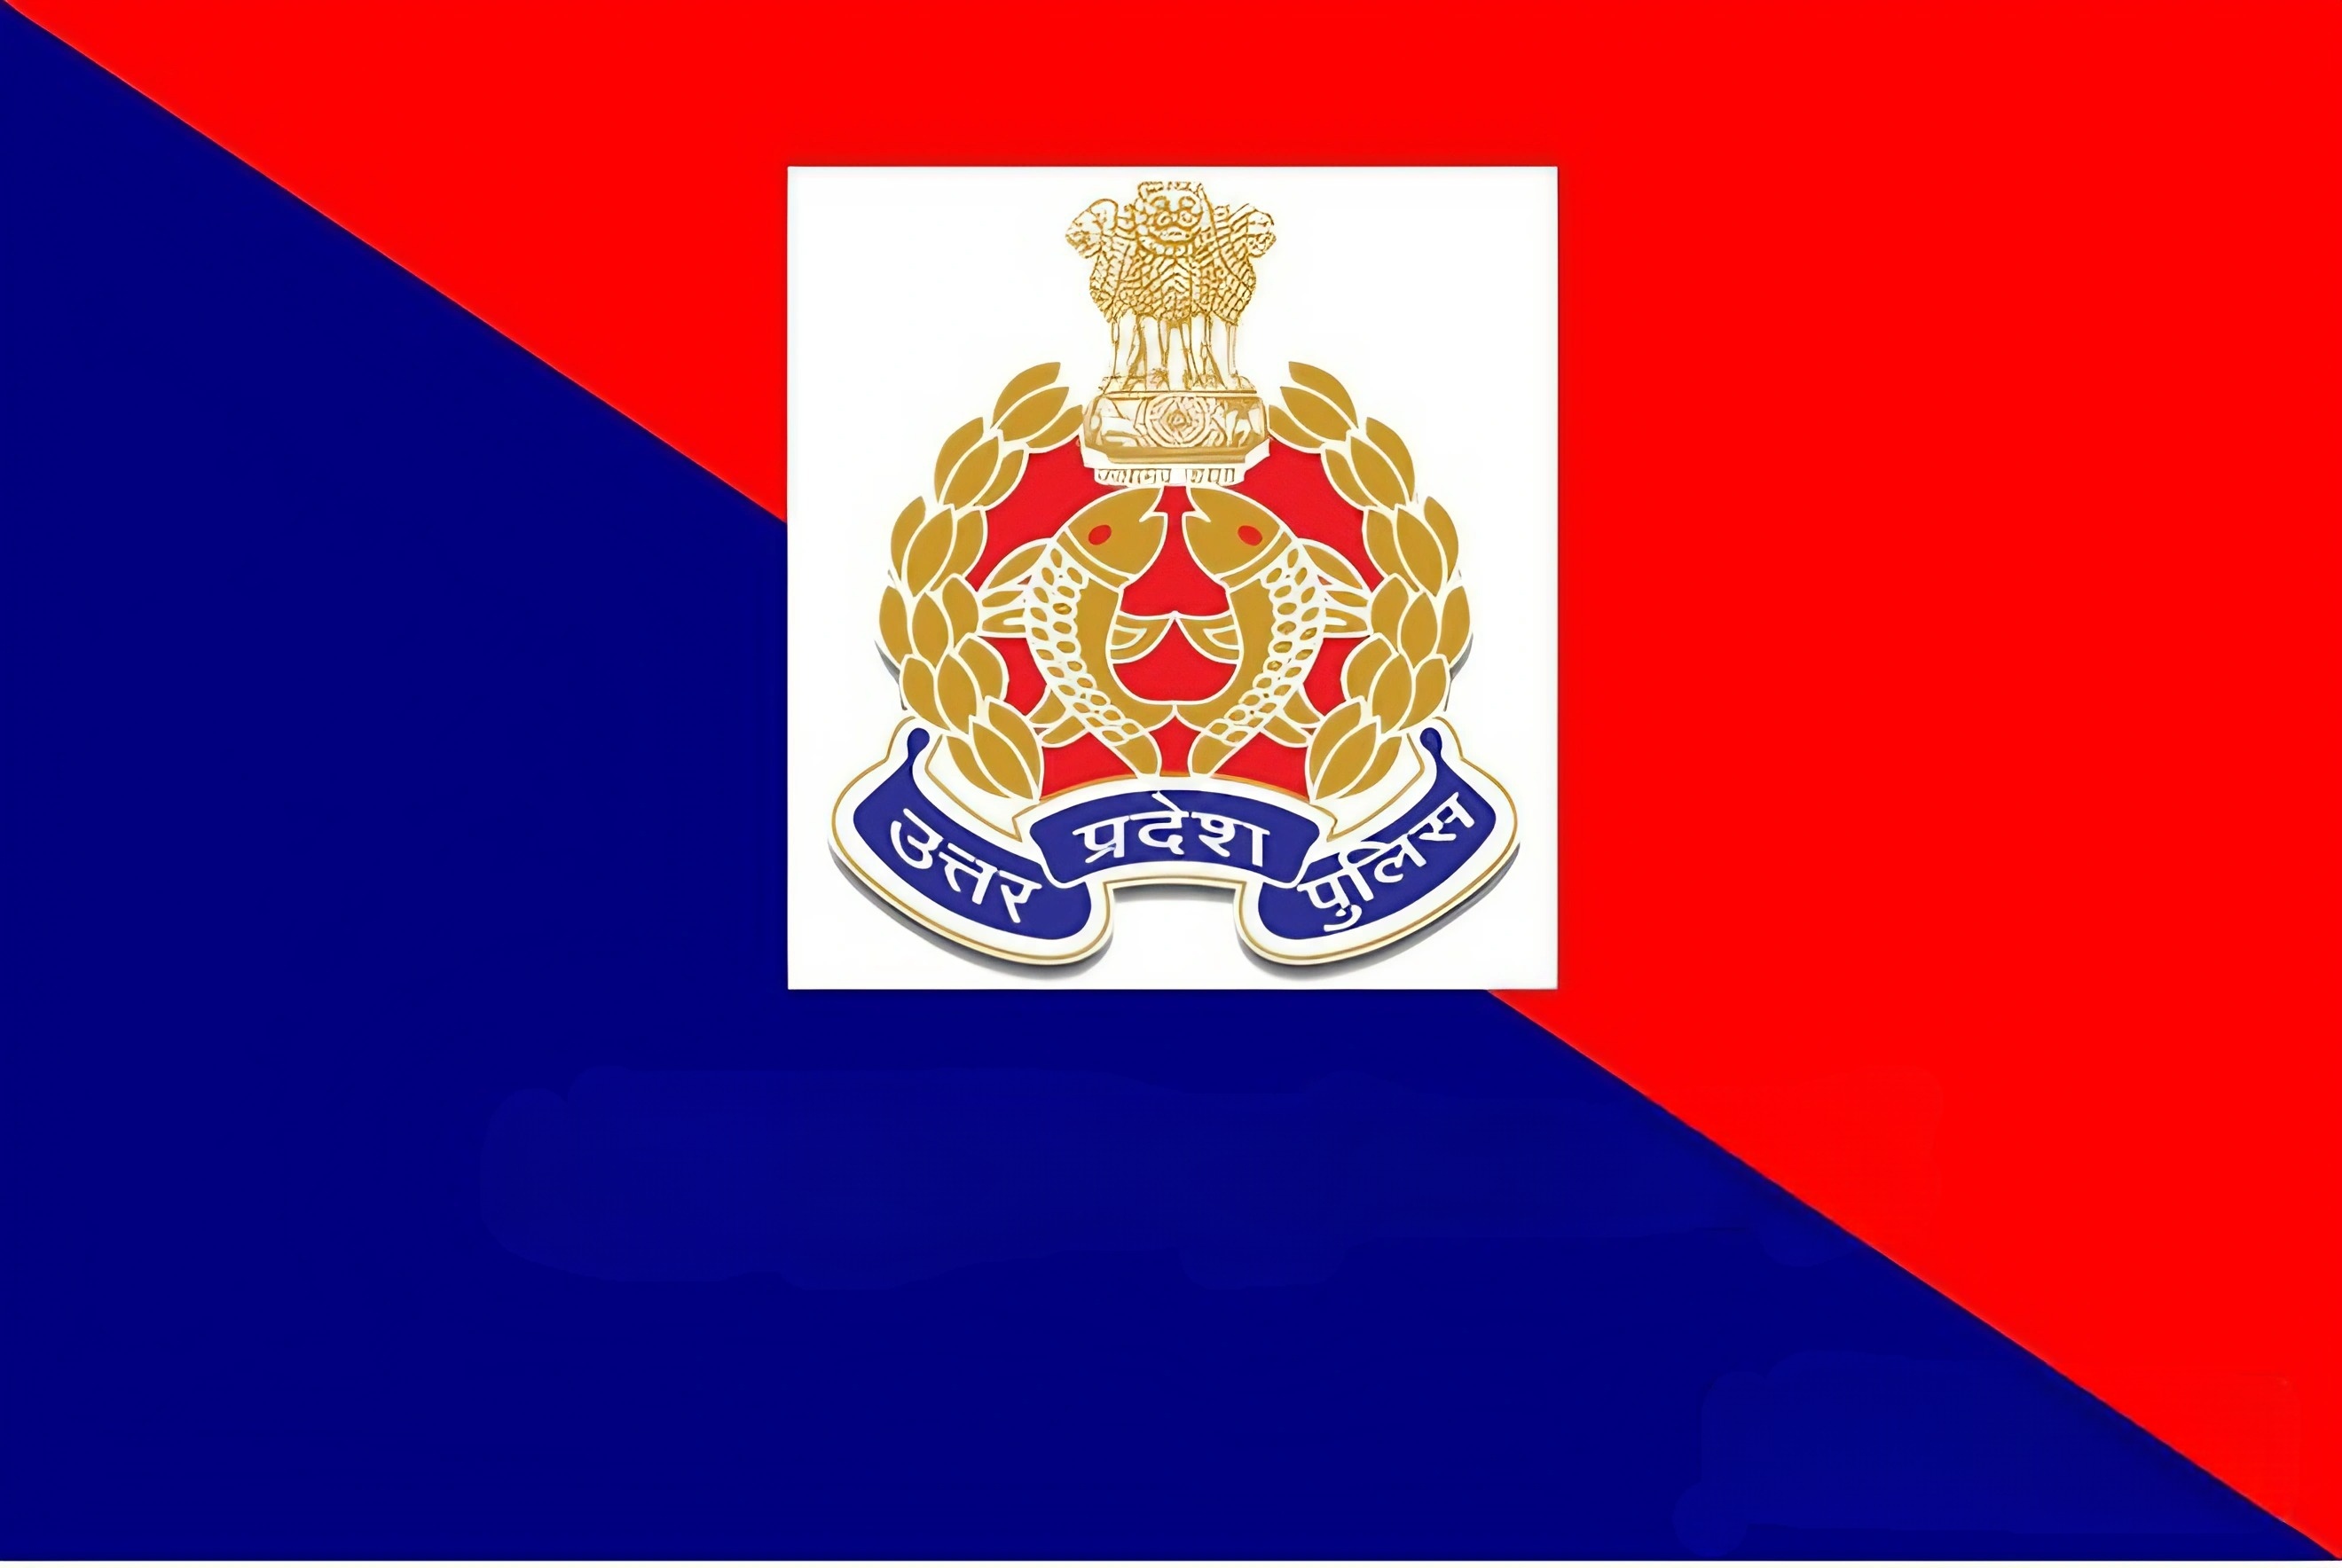 Uttar Pradesh Police - Badge